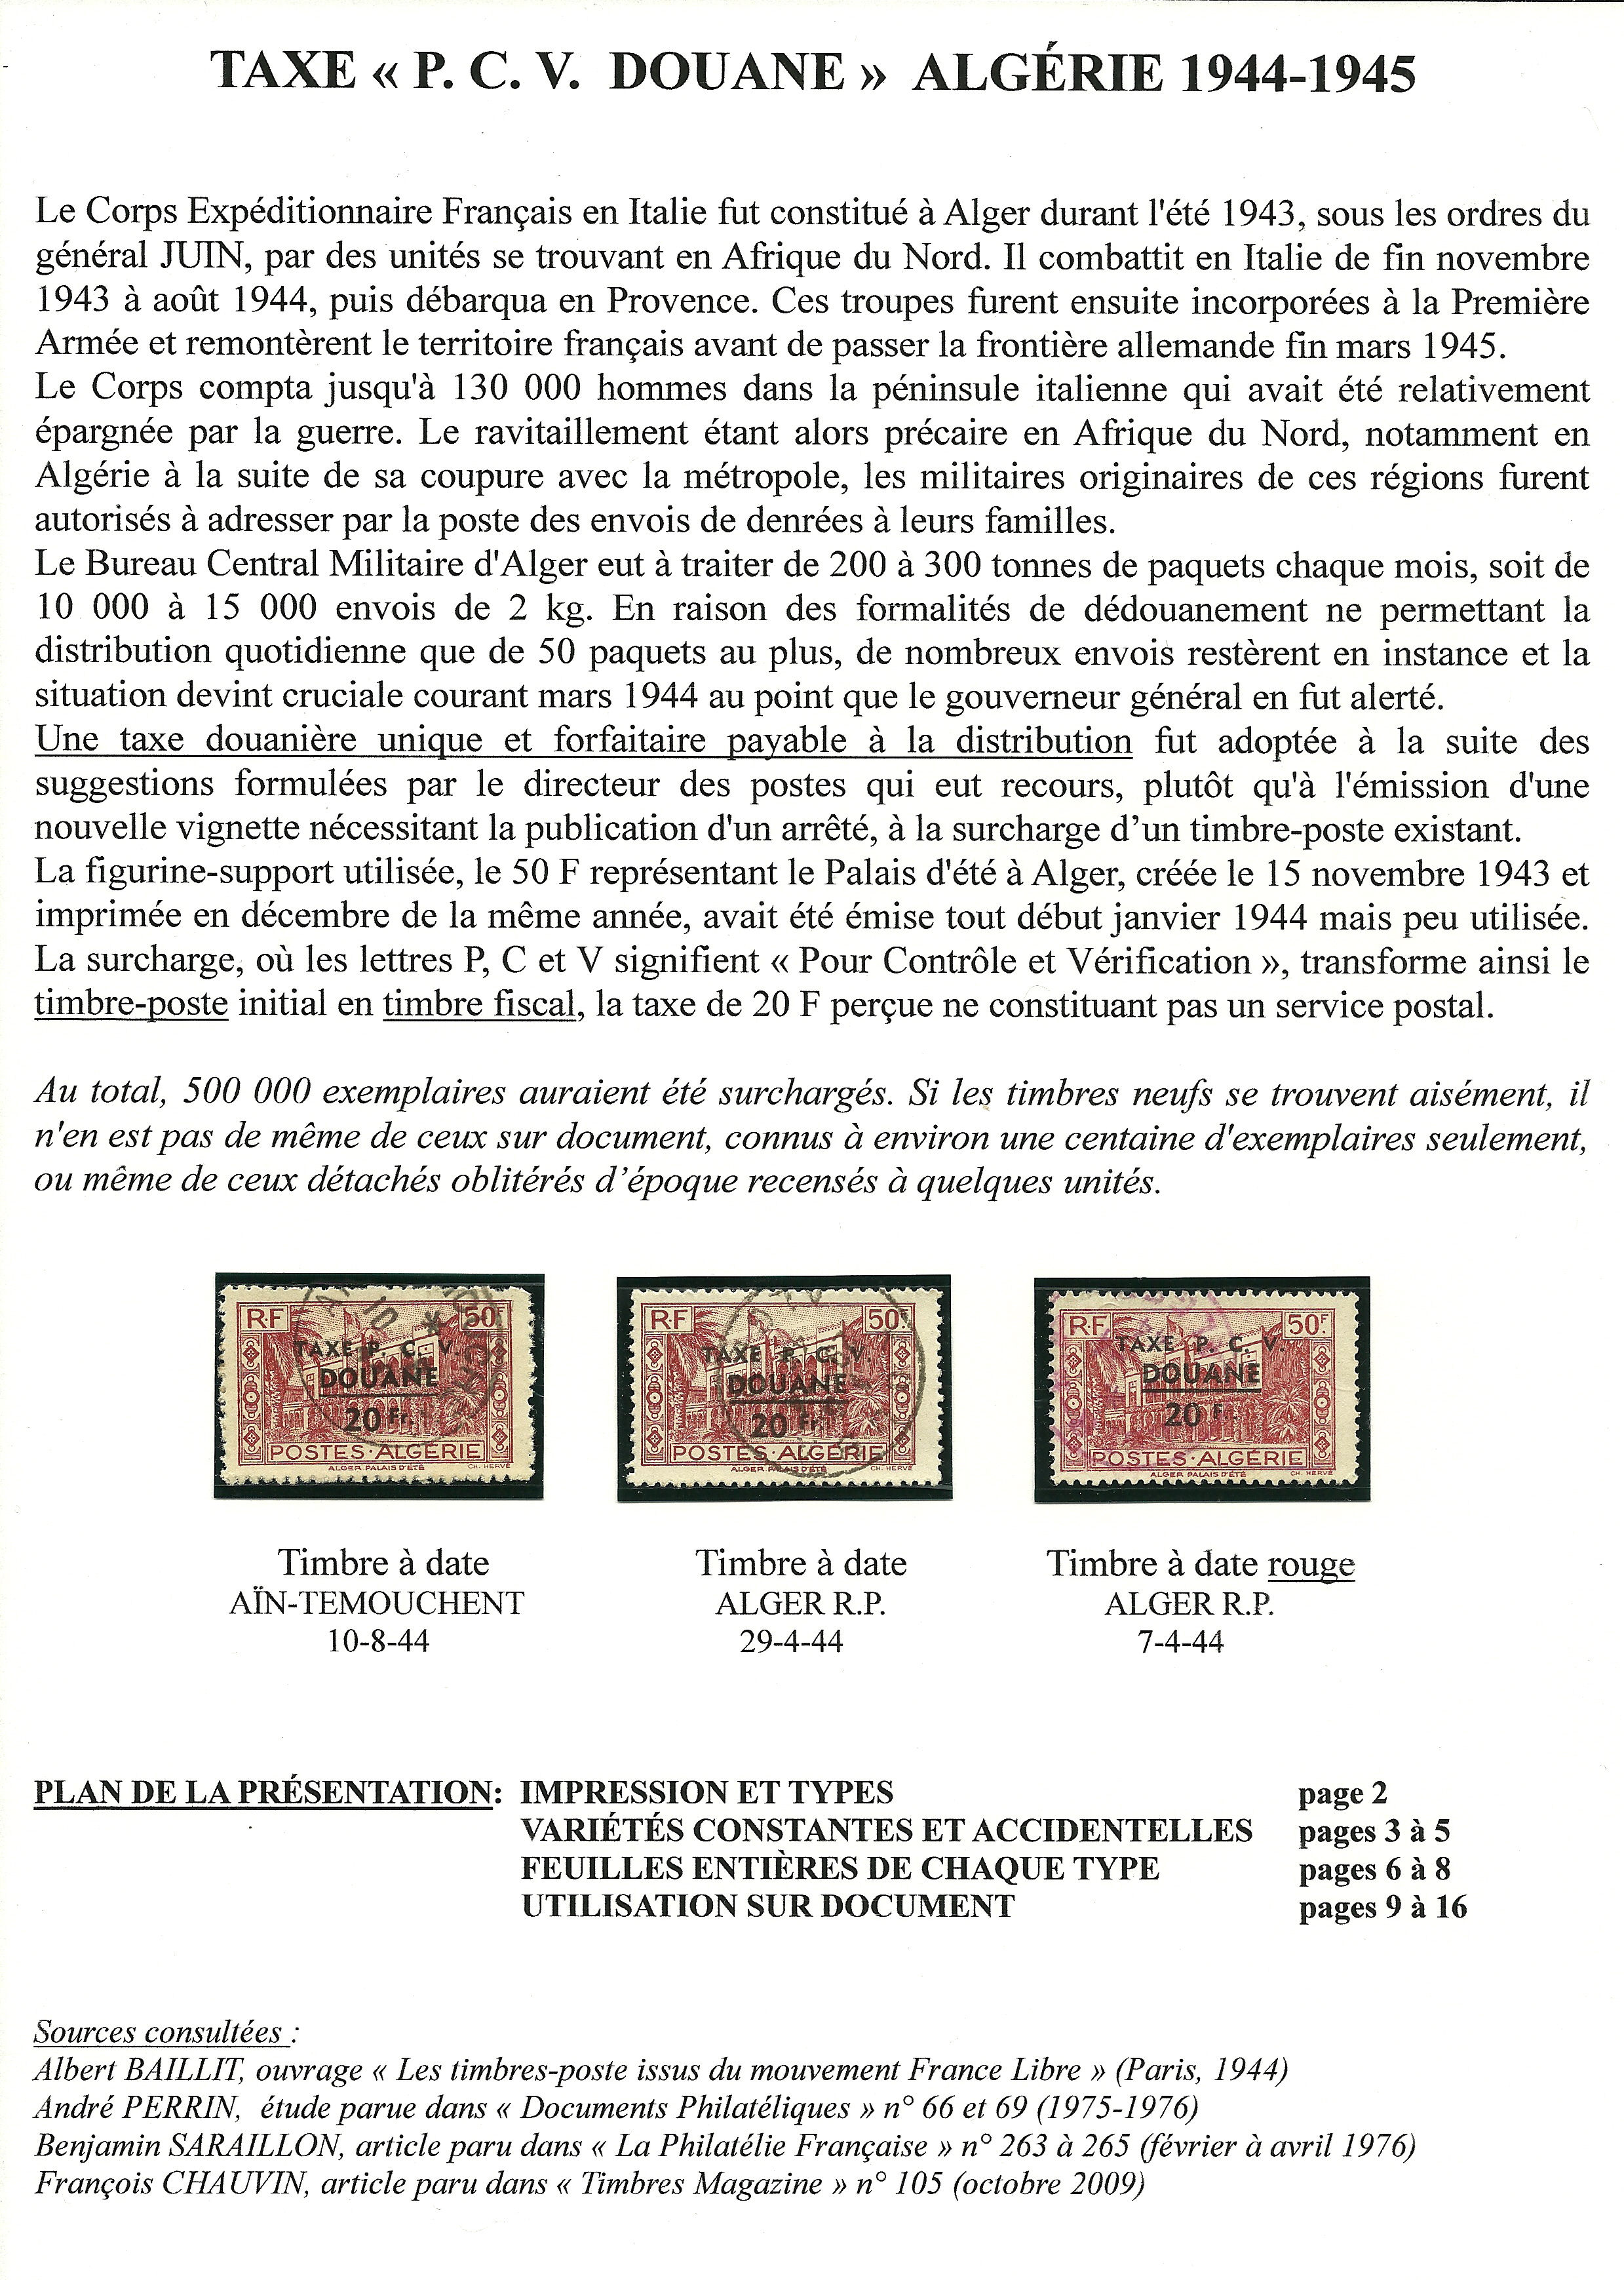 Taxe ���P.C.V Douane��� Alg��rie (1944 / 1945) p. 1